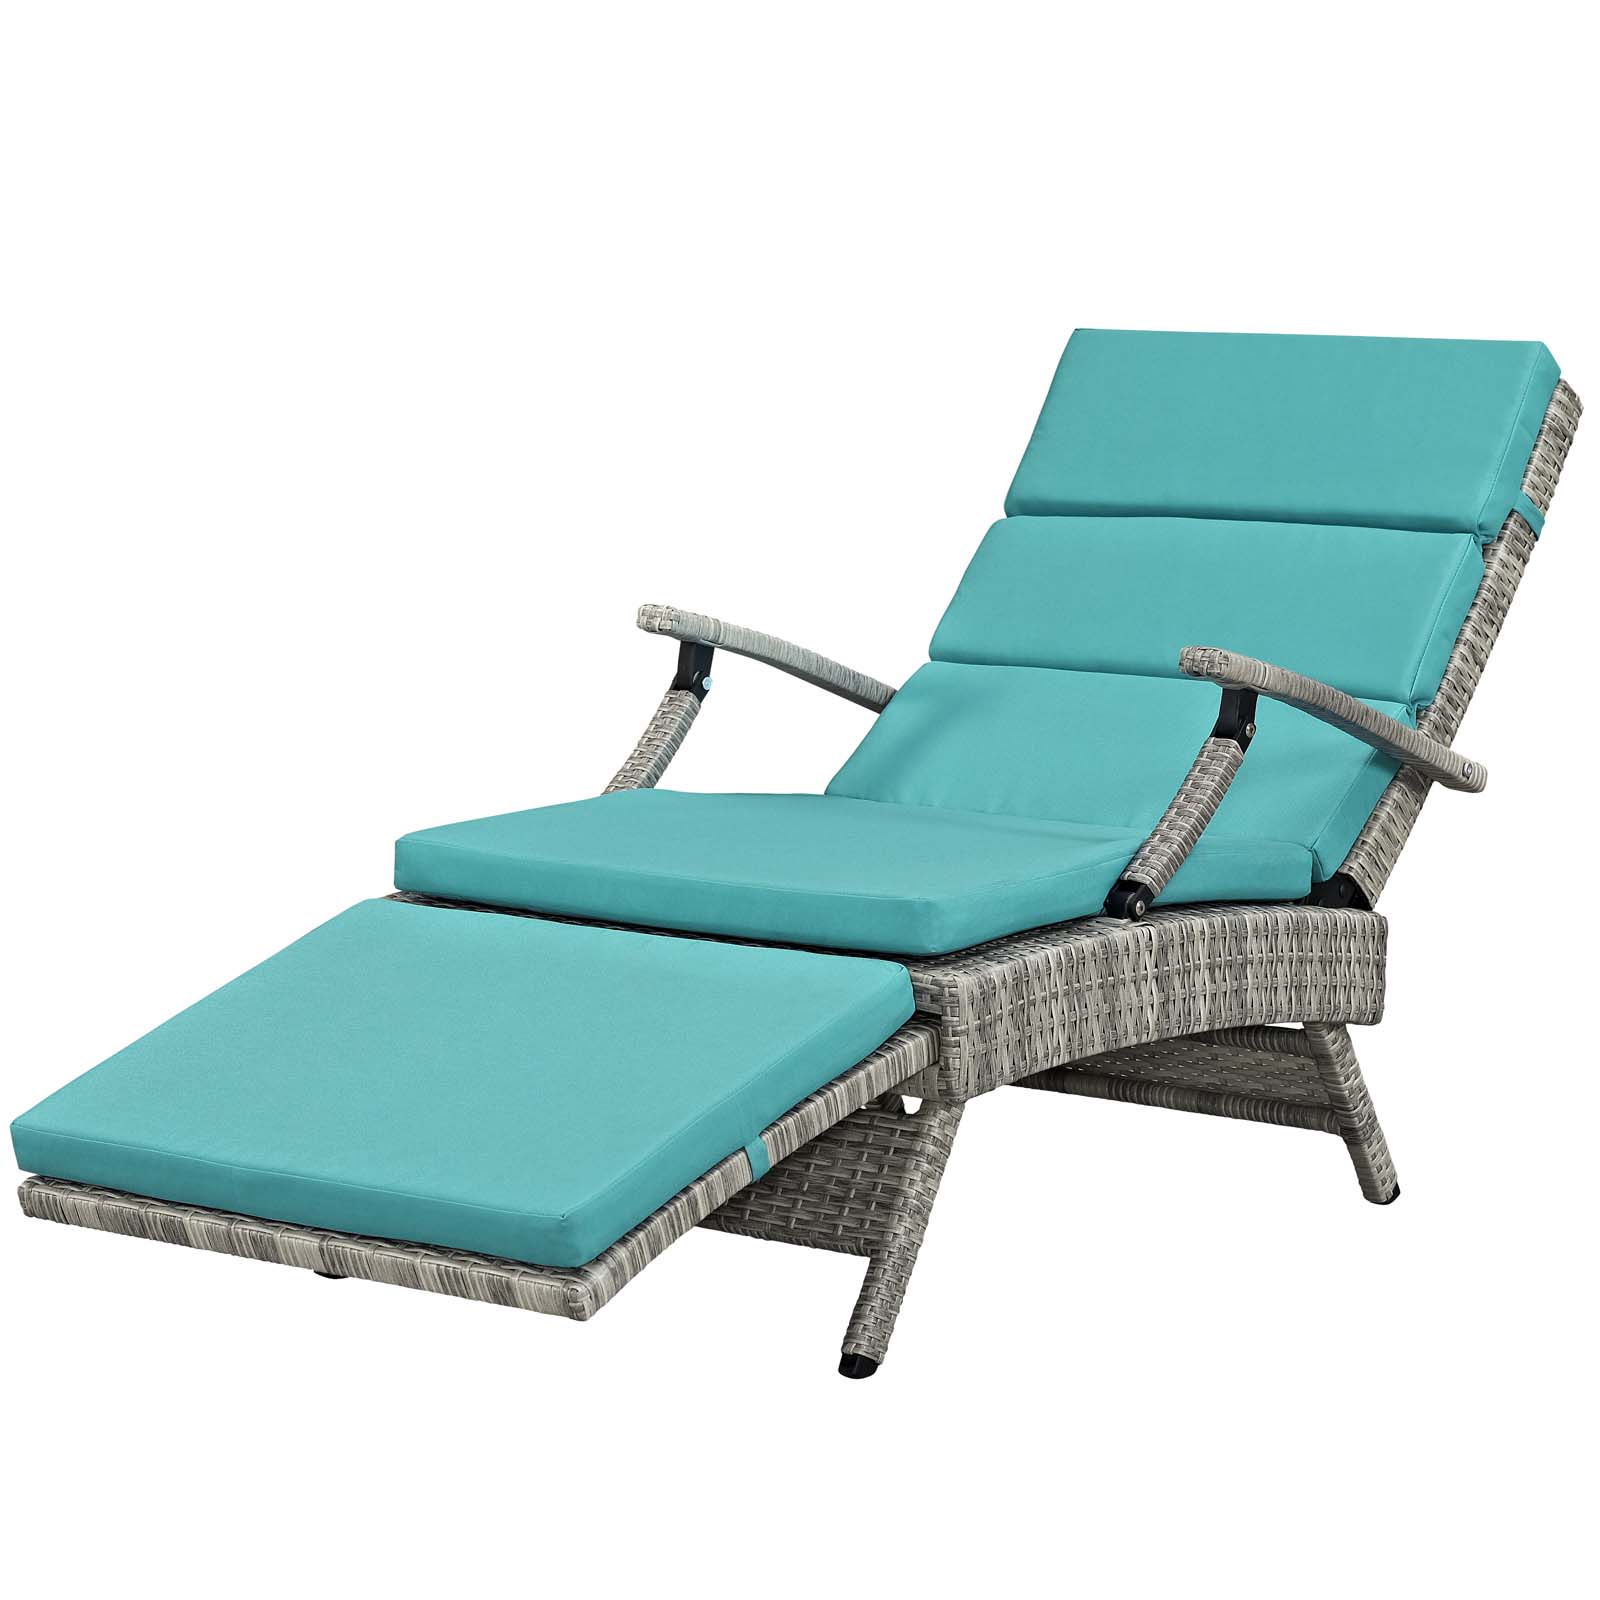 Contemporary Modern Urban Designer Outdoor Patio Balcony Garden Furniture Lounge Chair Chaise, Fabric Rattan Wicker, Blue - image 4 of 9